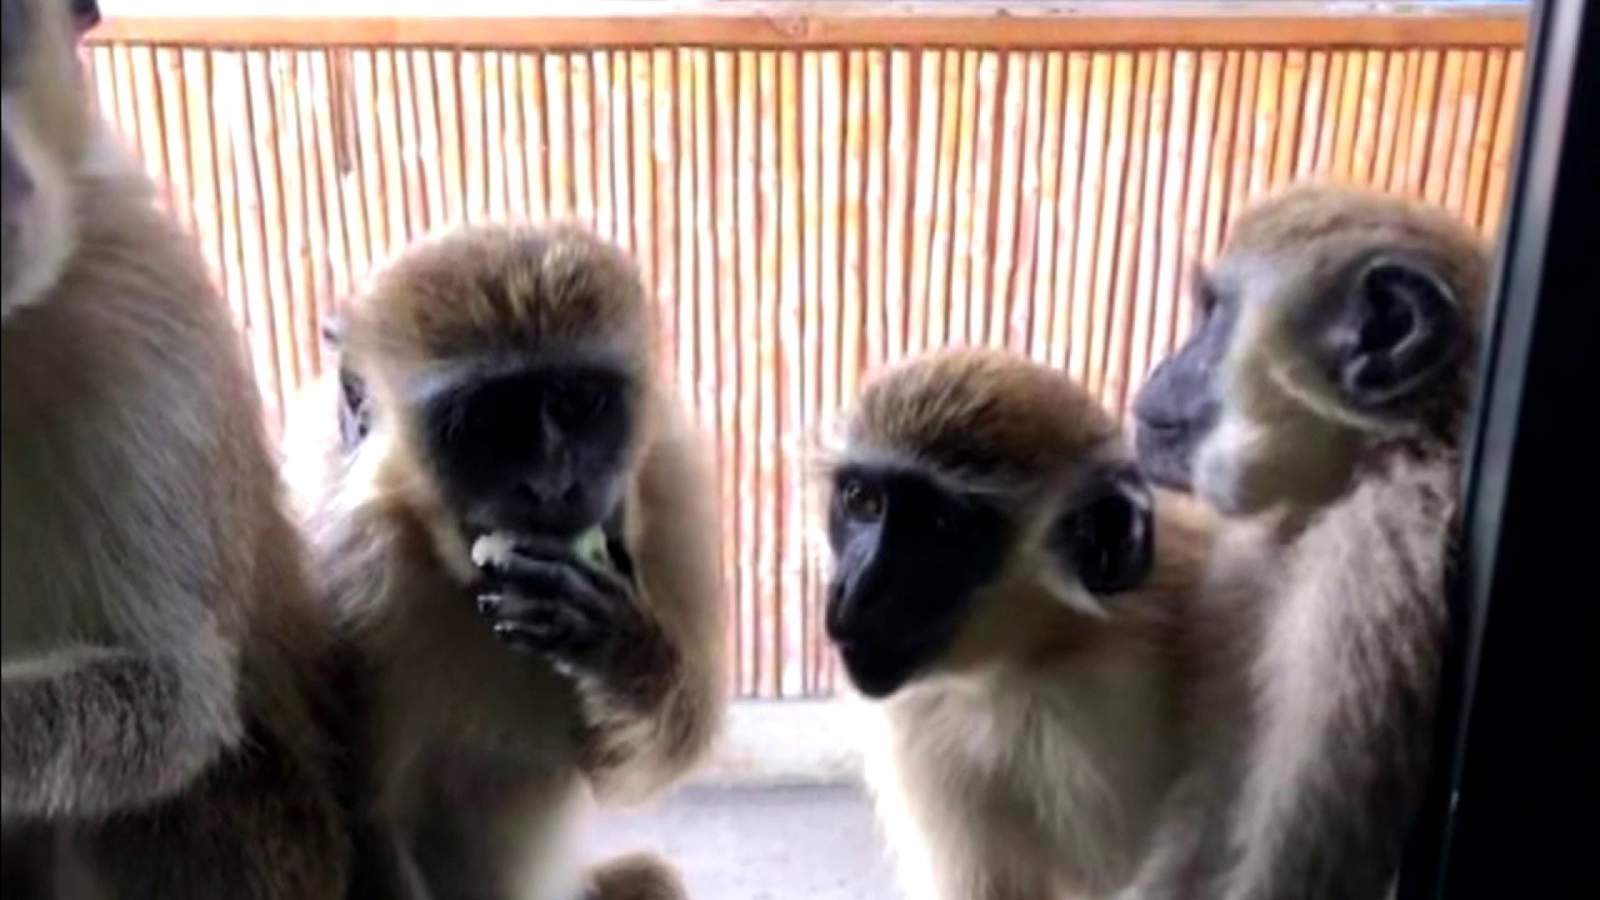 Colony of ‘friendly’ wild vervet monkeys grows near Florida airport